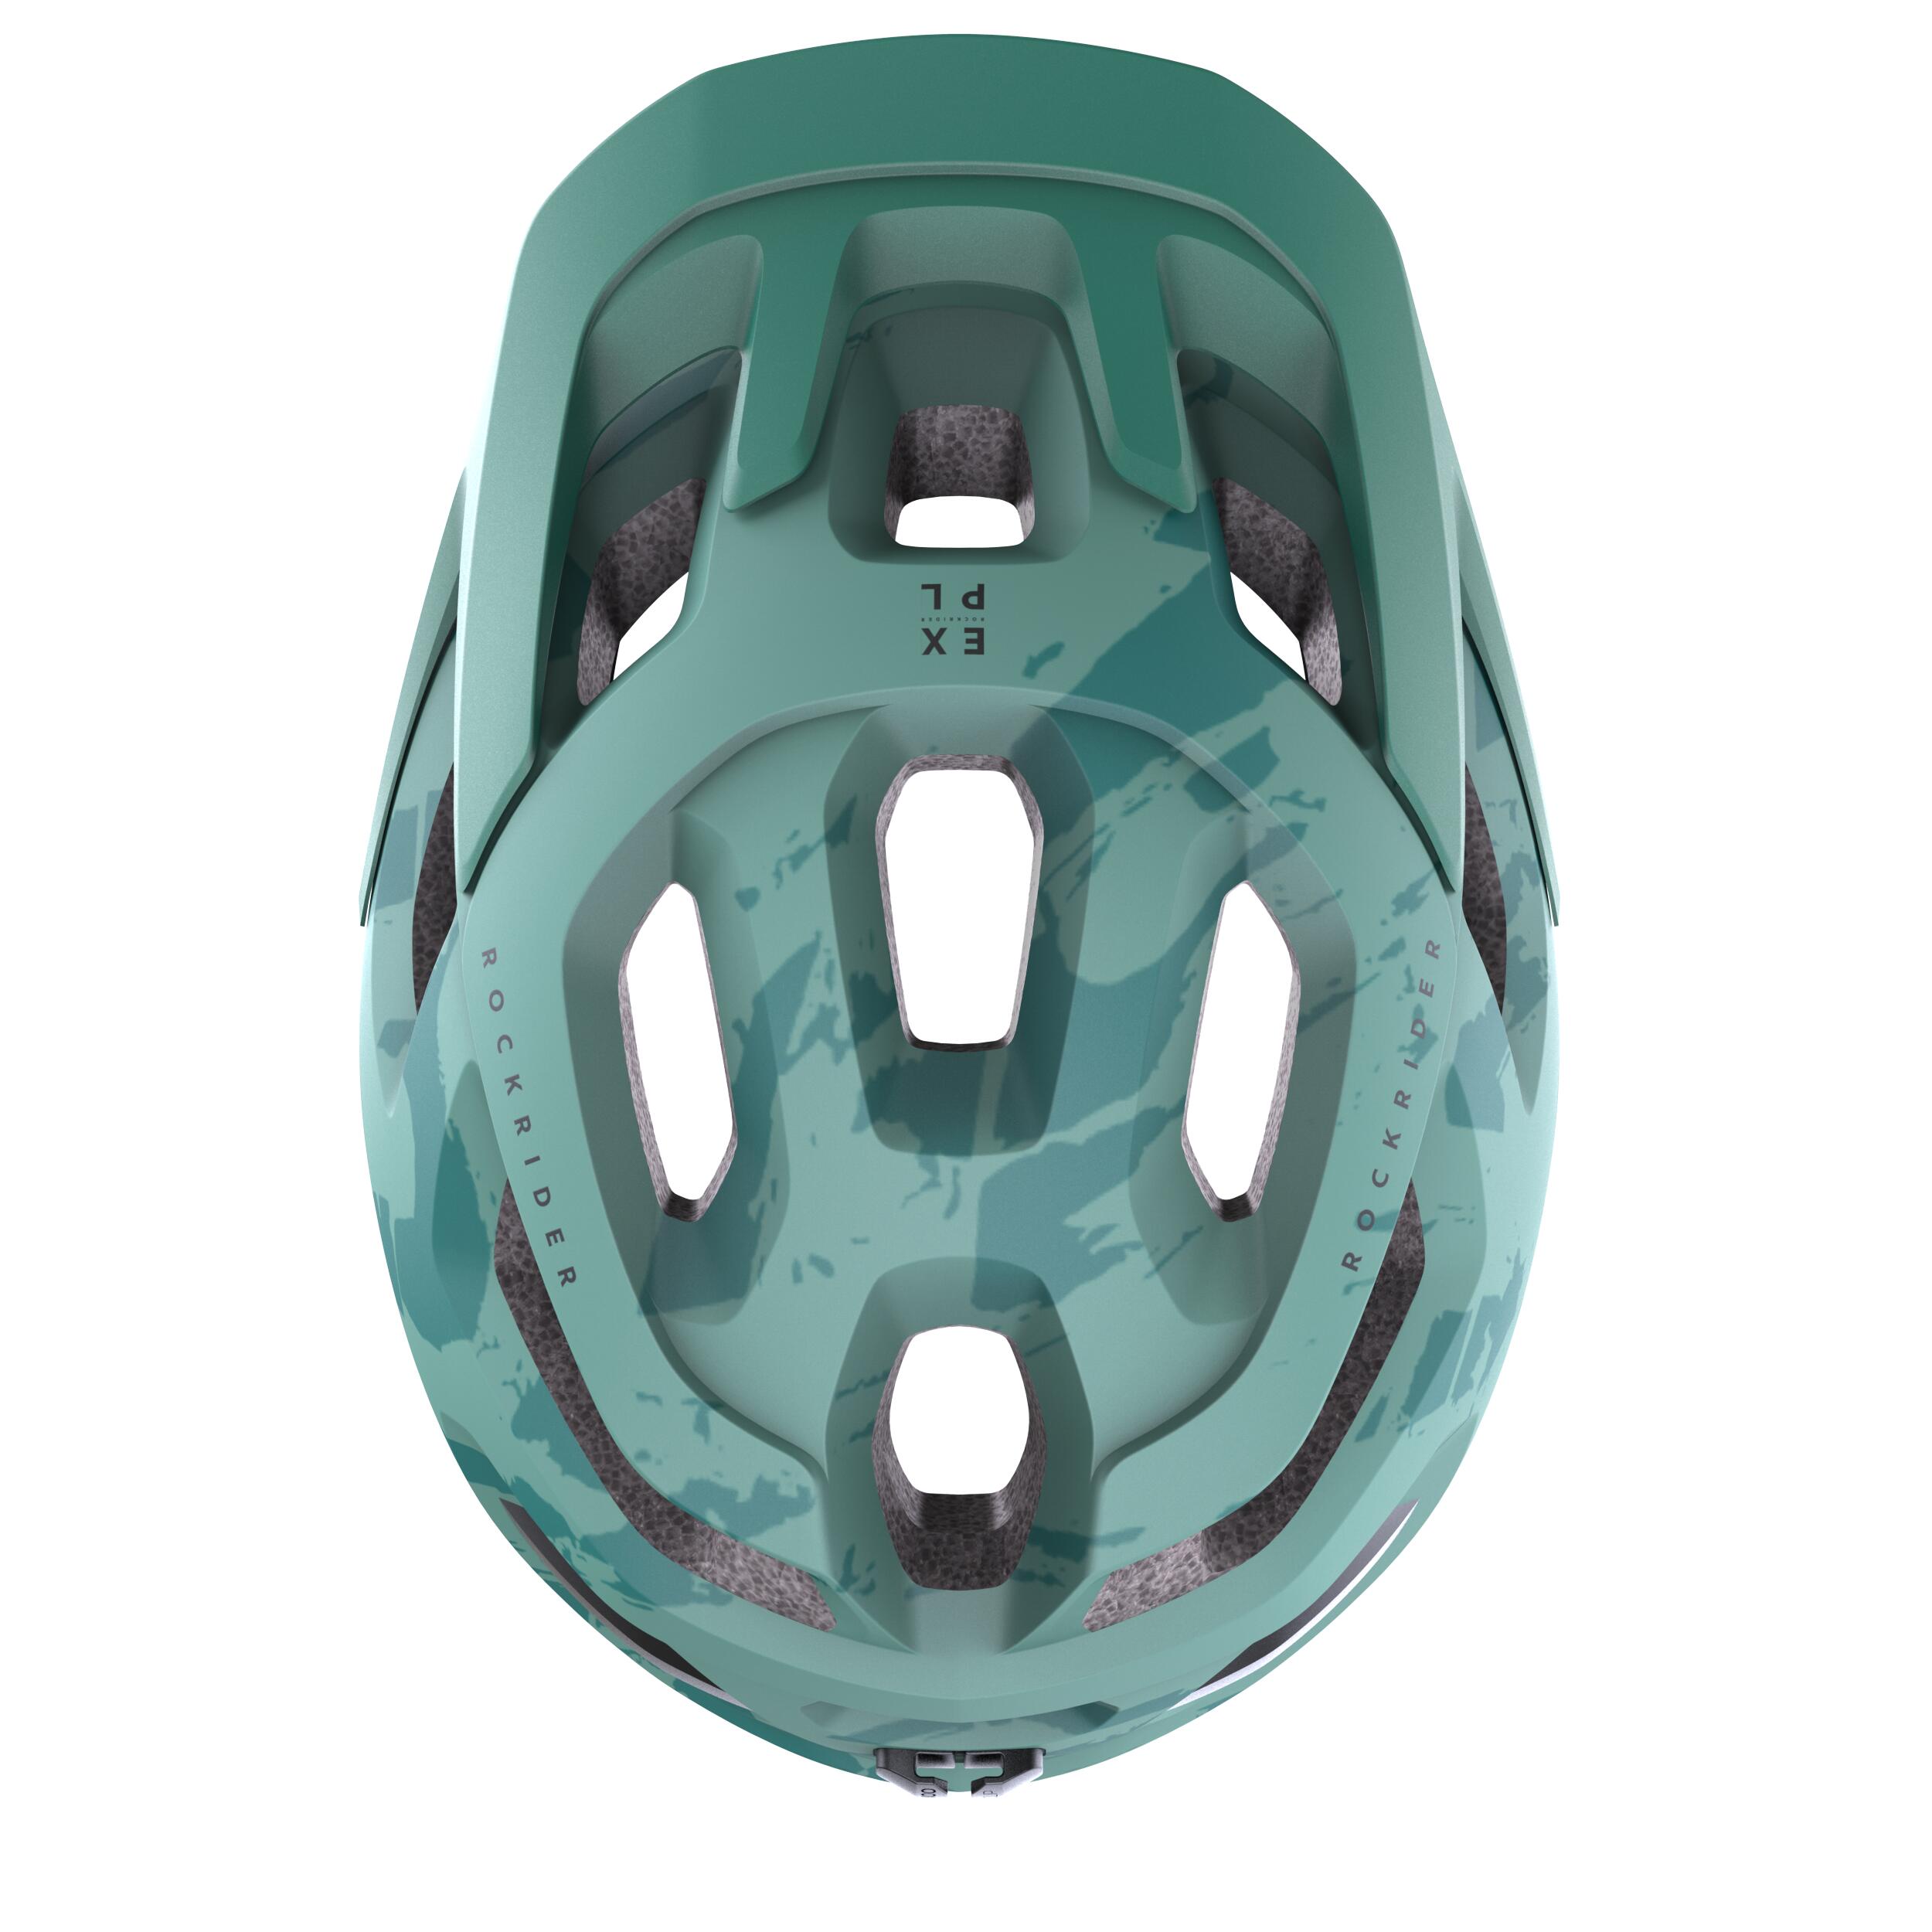 Mountain Bike Helmet EXPL 500 - Green 17/18